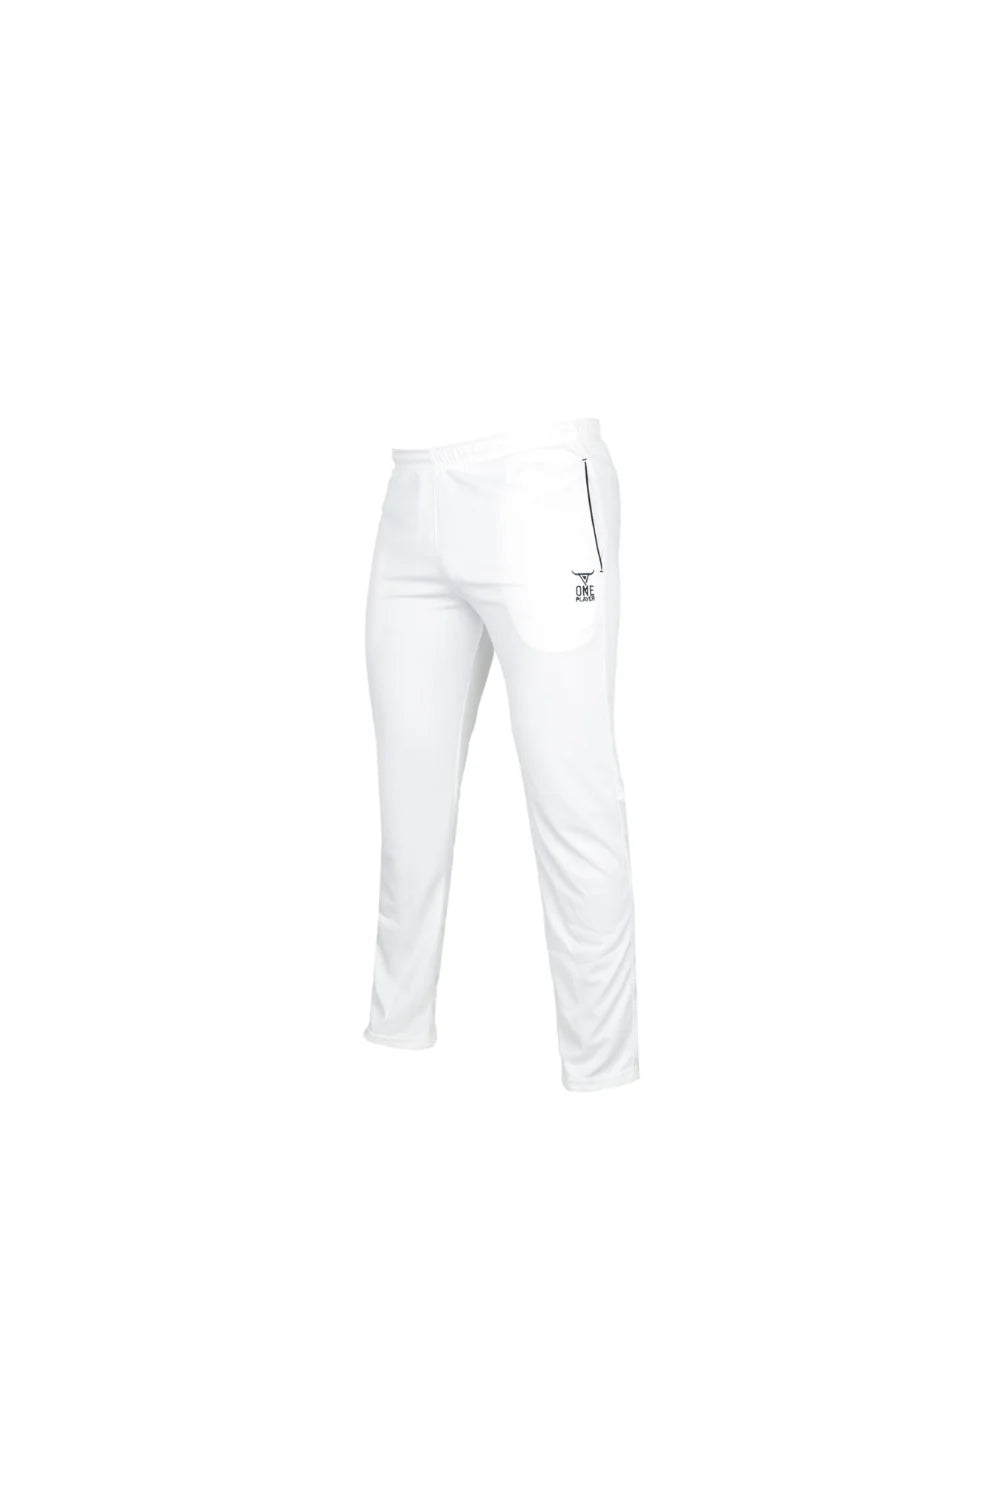 TYKA Apex Cricket - White Pant – www.brewingcricket.com